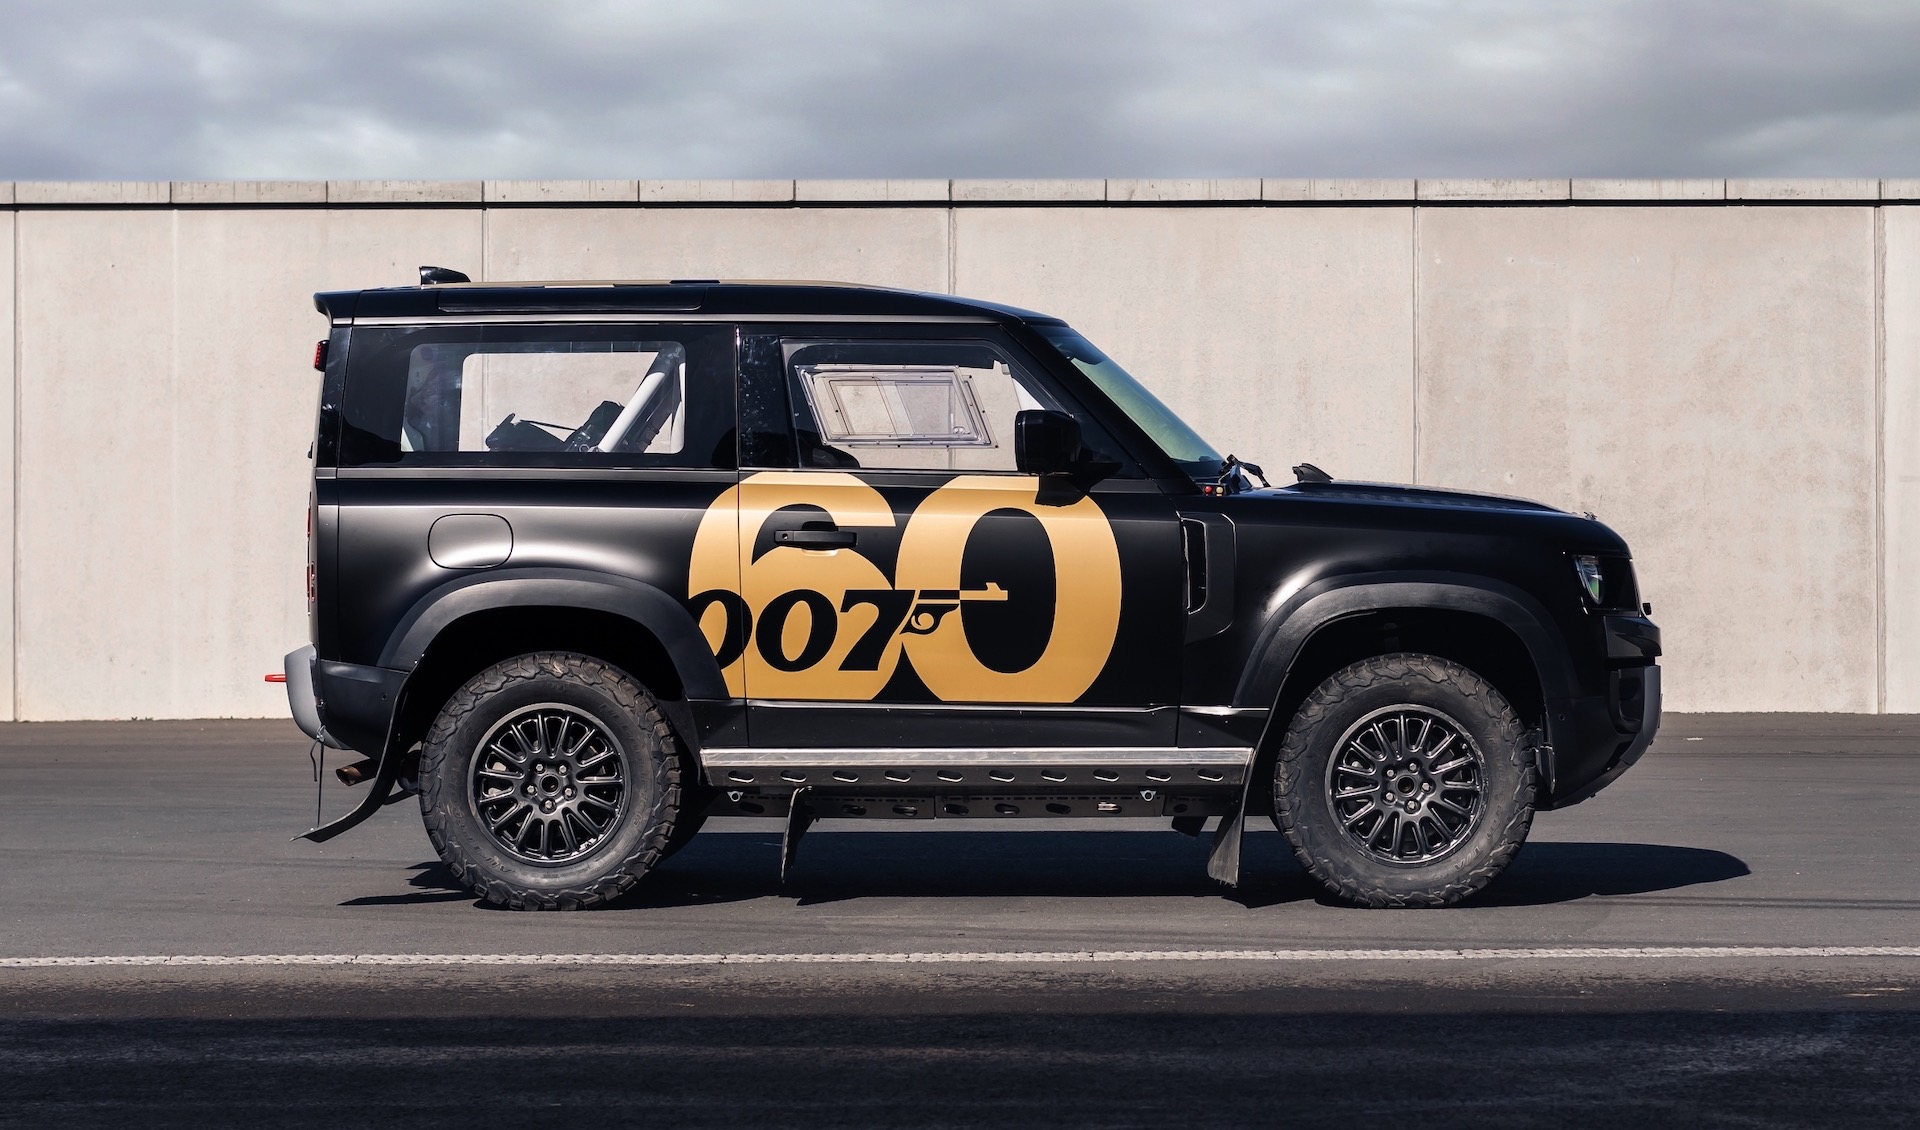 Rally-spec Land Rover Defender 90 celebrates 007’s 60th anniversary